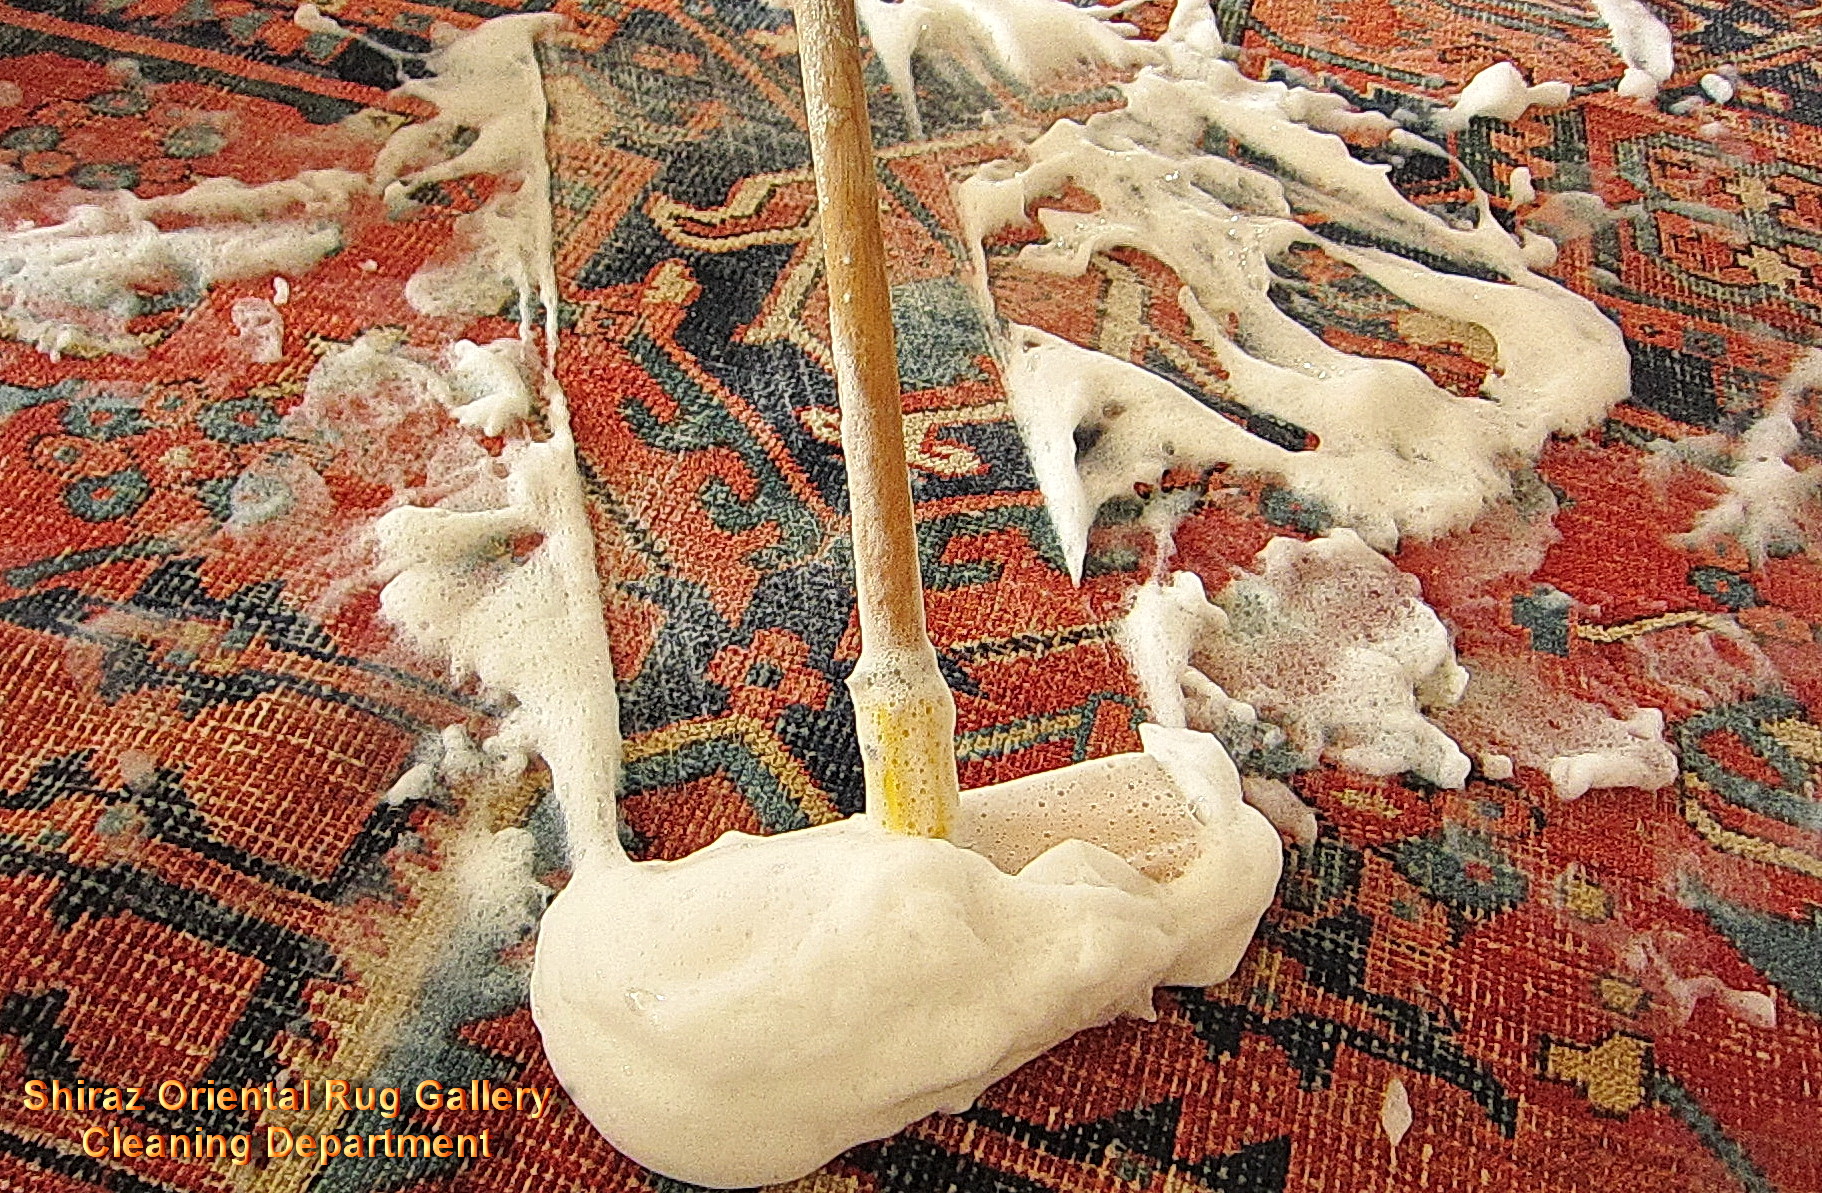 Shiraz Oriental Rug Gallery